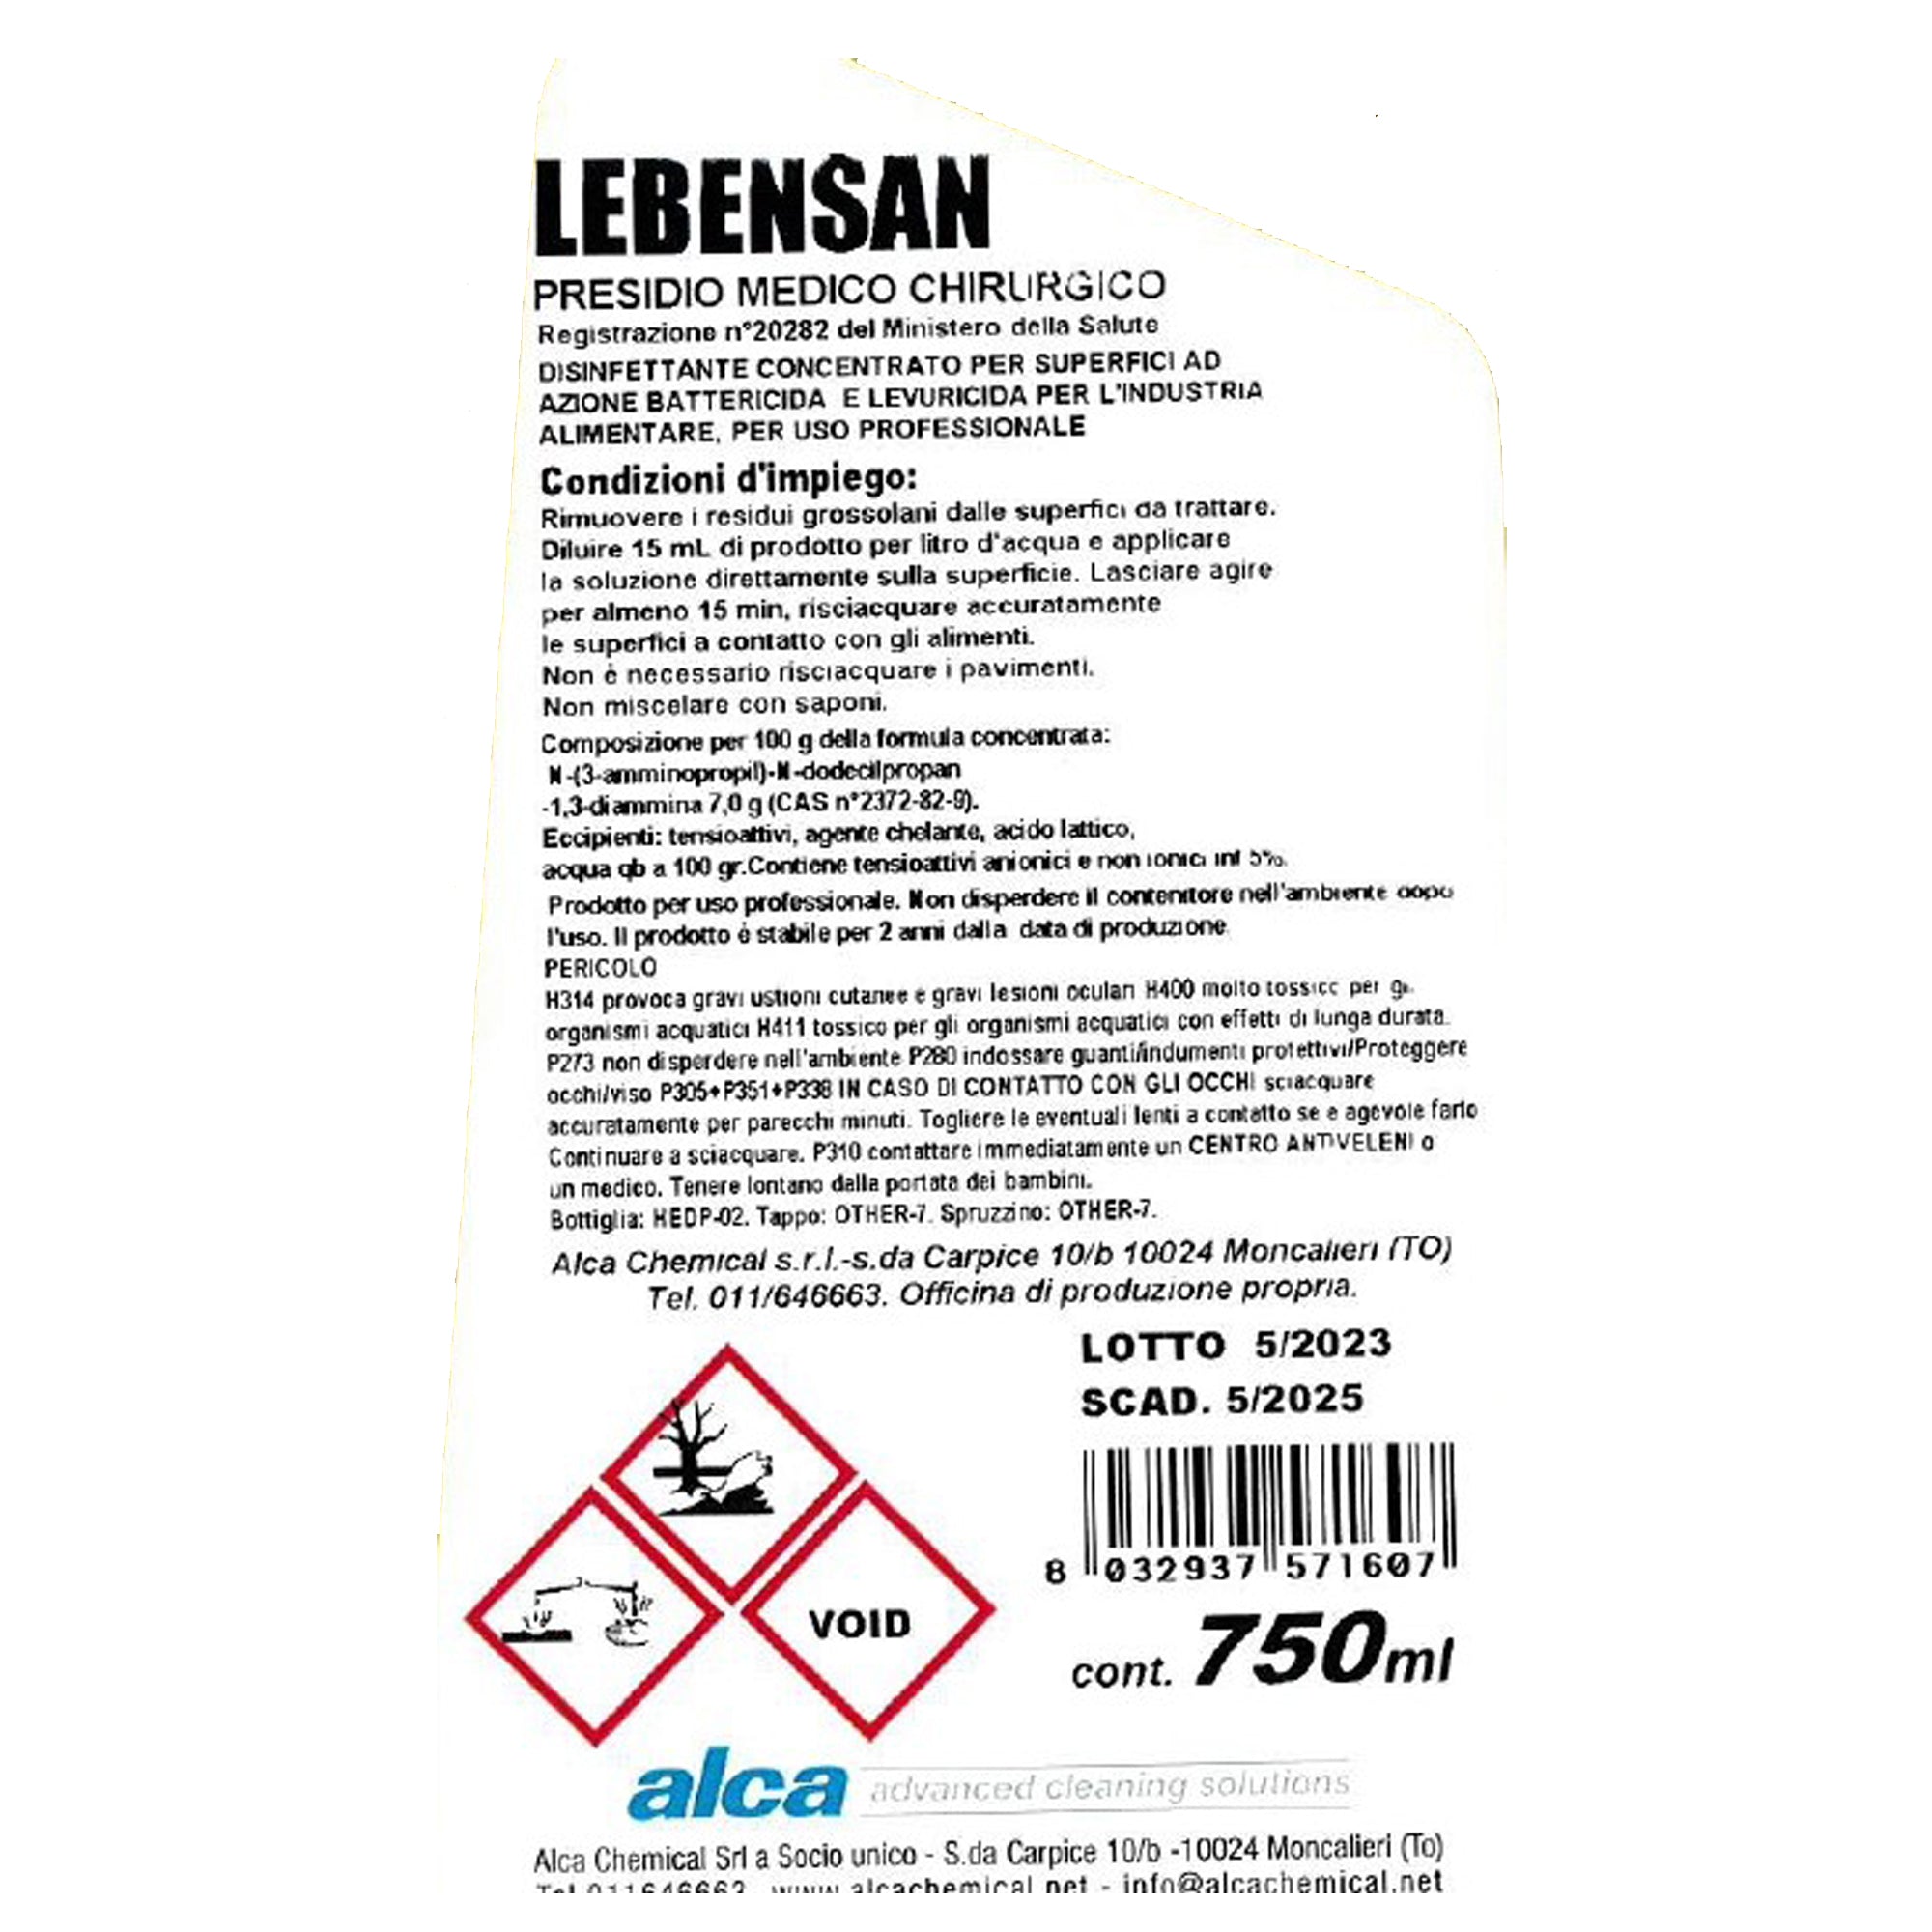 alca-disinfettante-lebensan-trigger-750ml